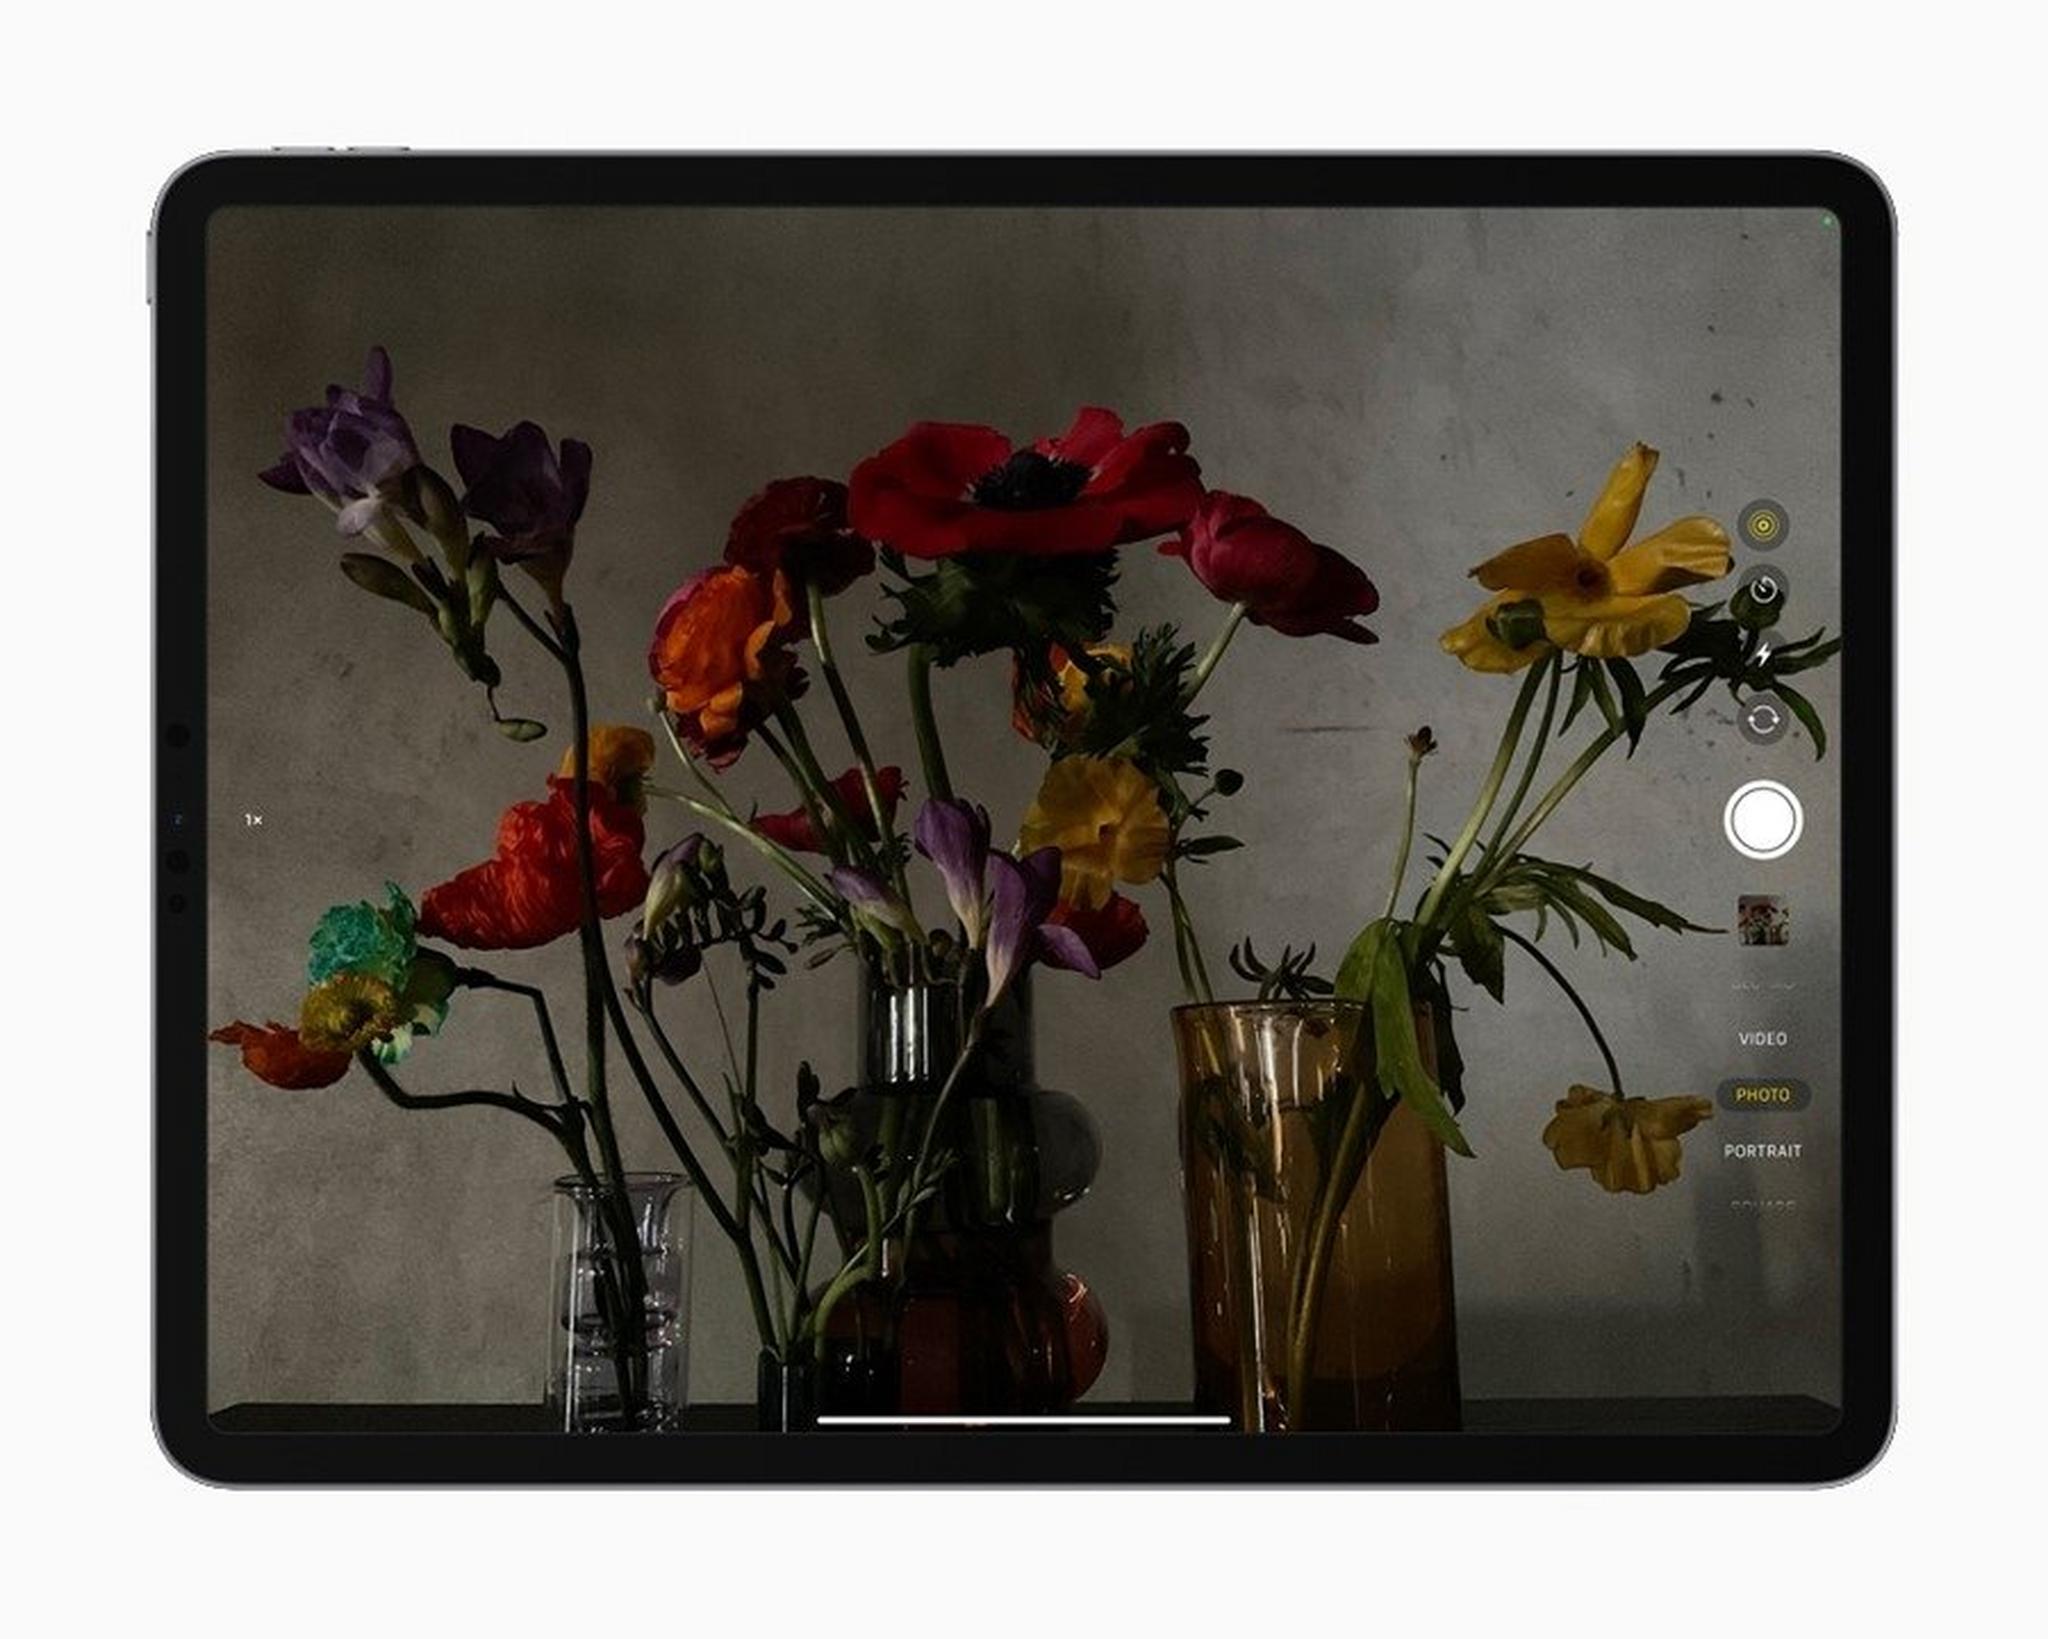 Apple iPad Pro 2021 M1 256GB 5G 12.9-inch Tablet - Grey